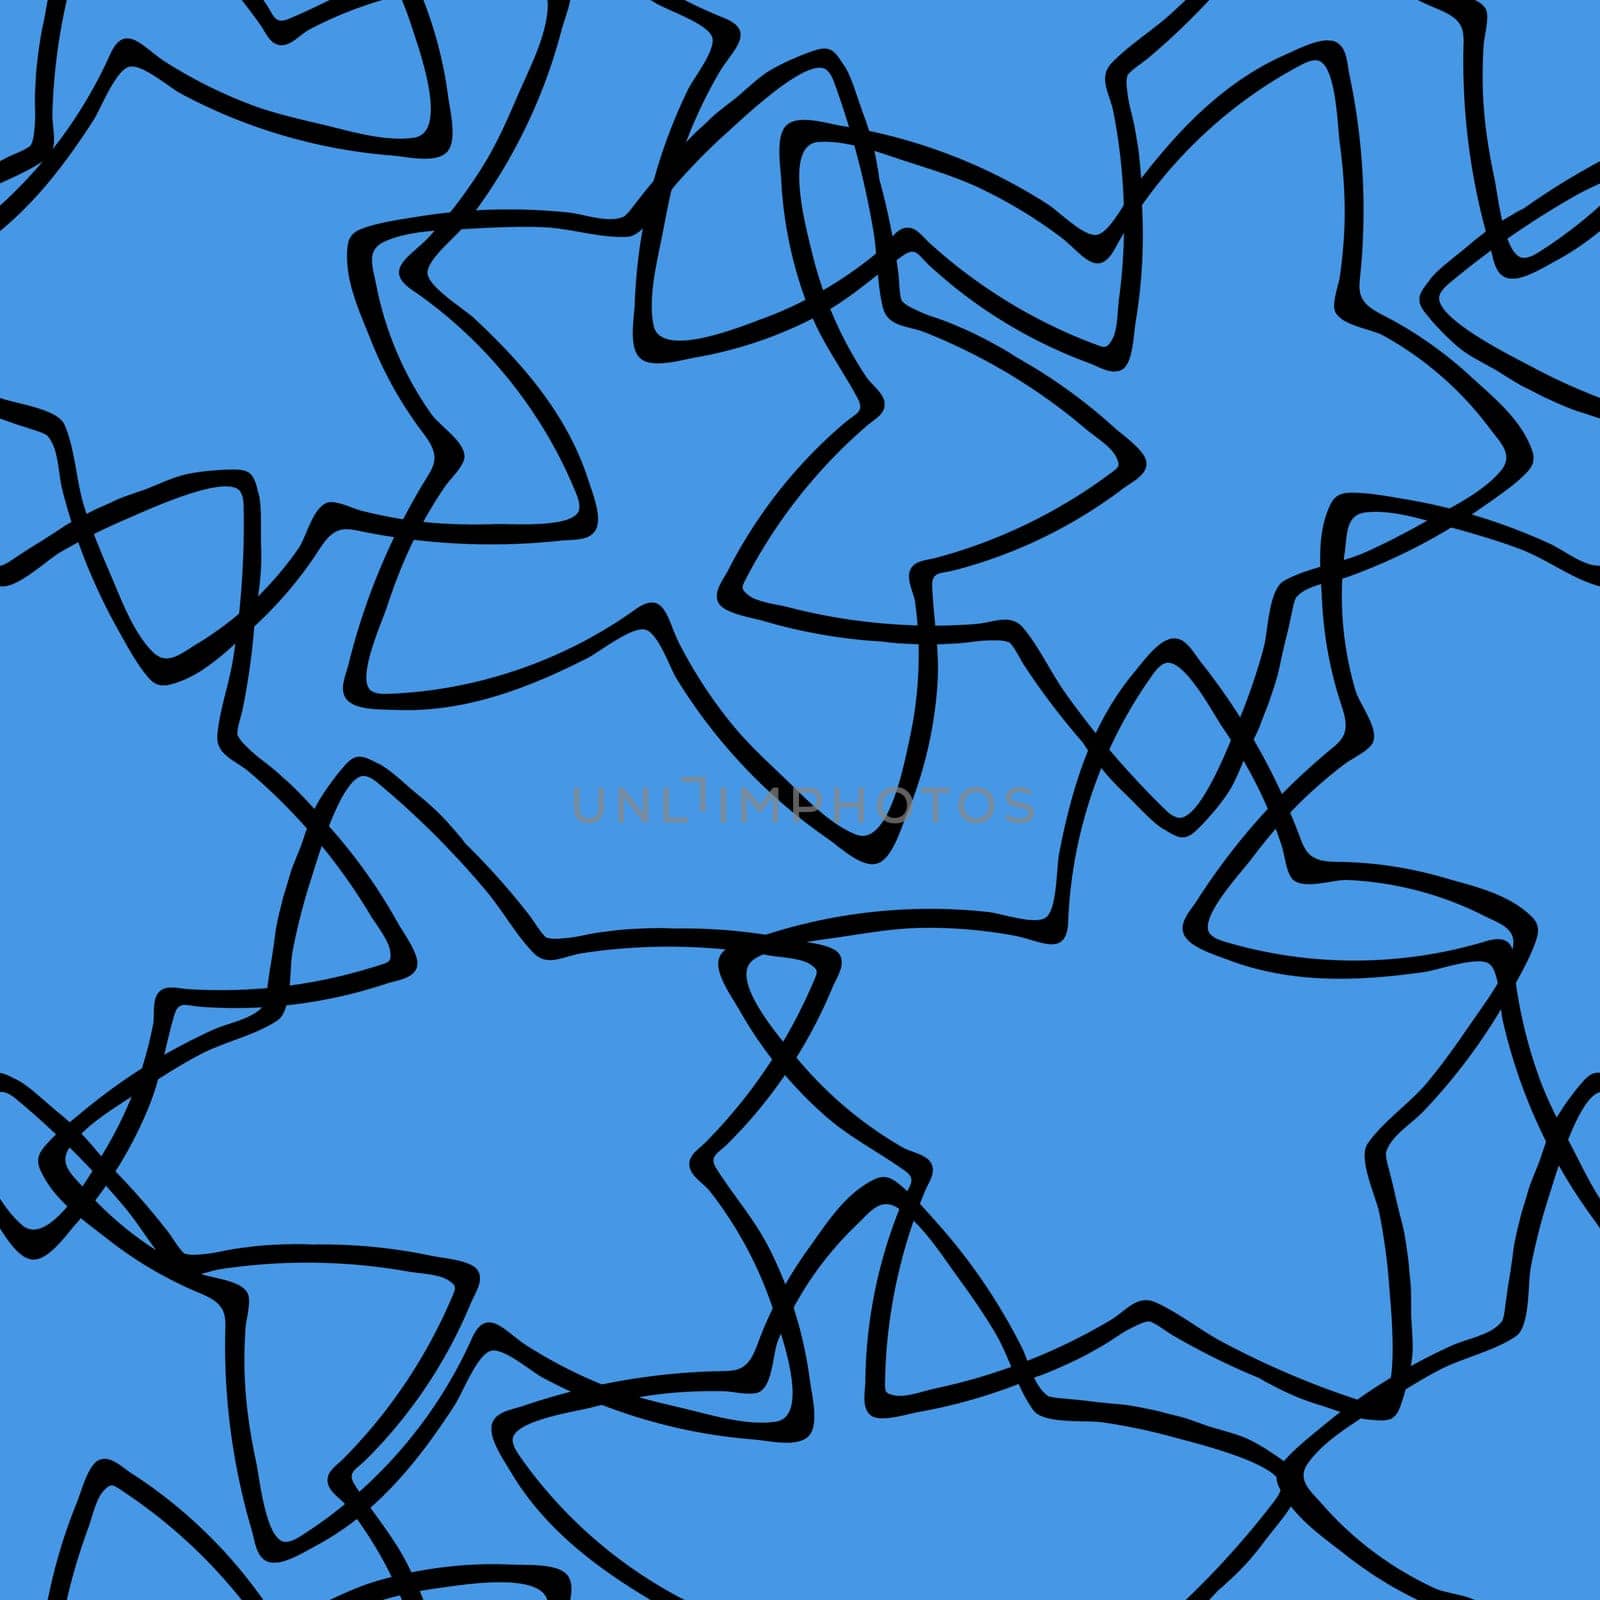 Big Star Fish Seamless Pattern. Background with Hand Drawn Doodle Cute Sea Star. by Rina_Dozornaya